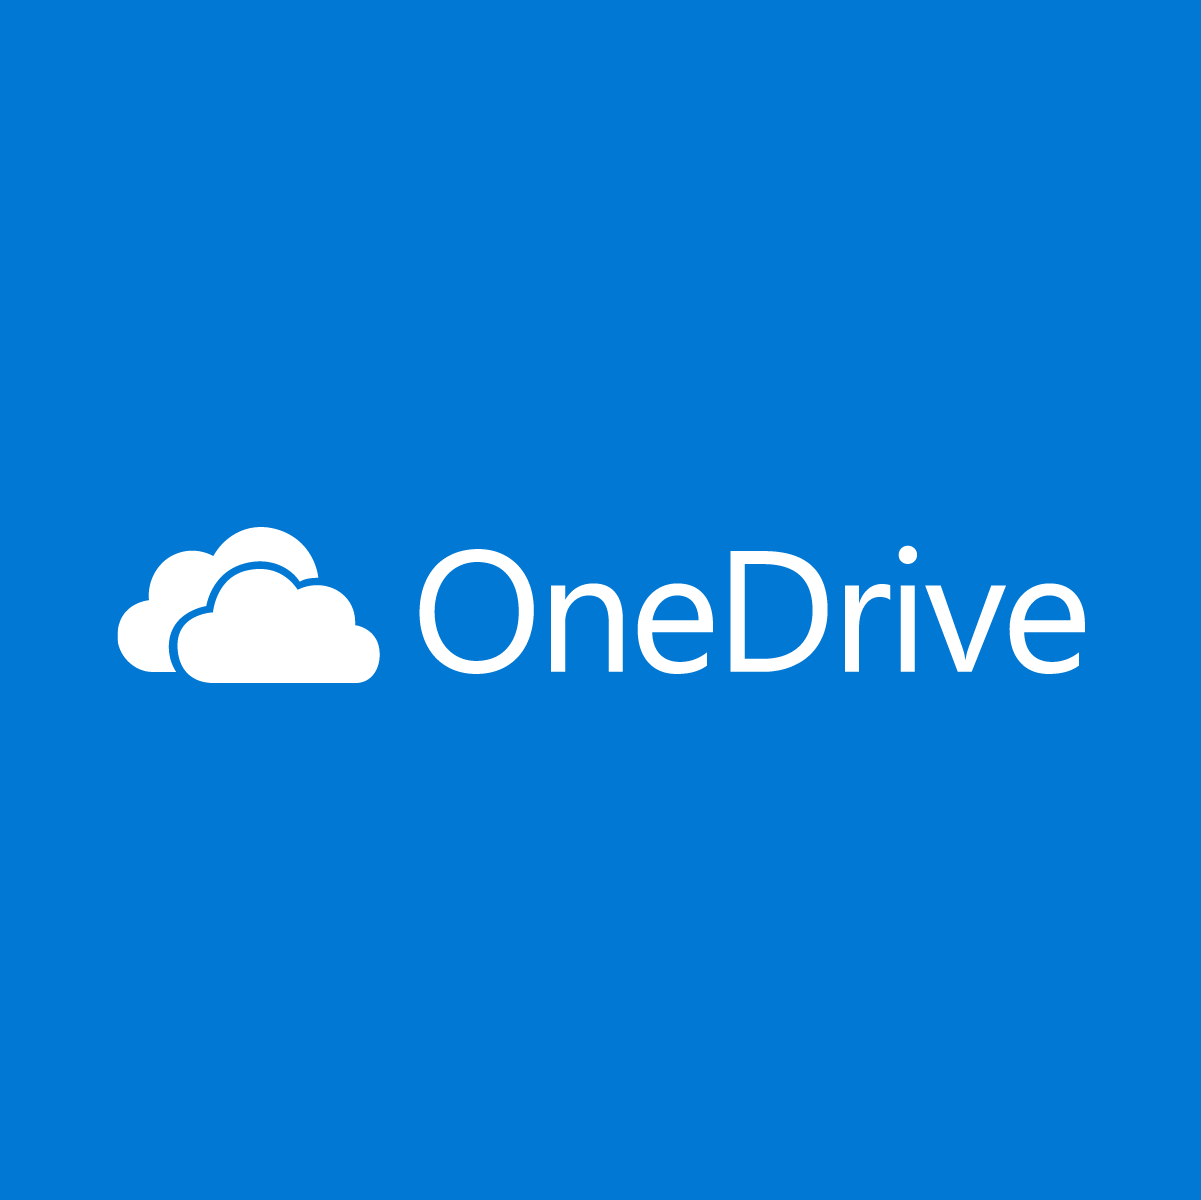 One Drive Microsoft Logo - Microsoft OneDrive